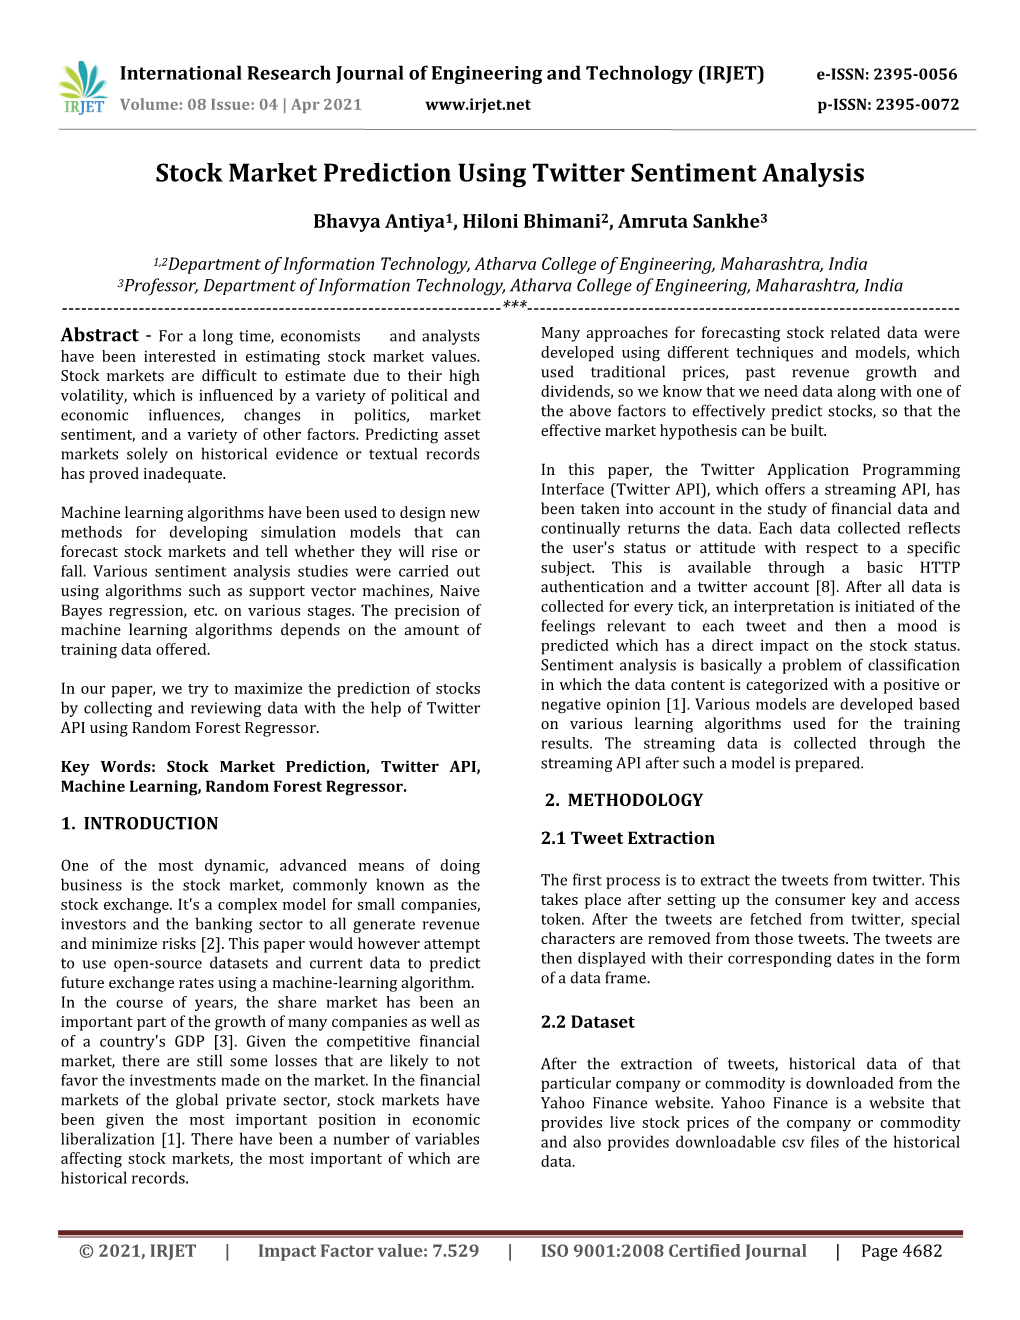 Stock Market Prediction Using Twitter Sentiment Analysis